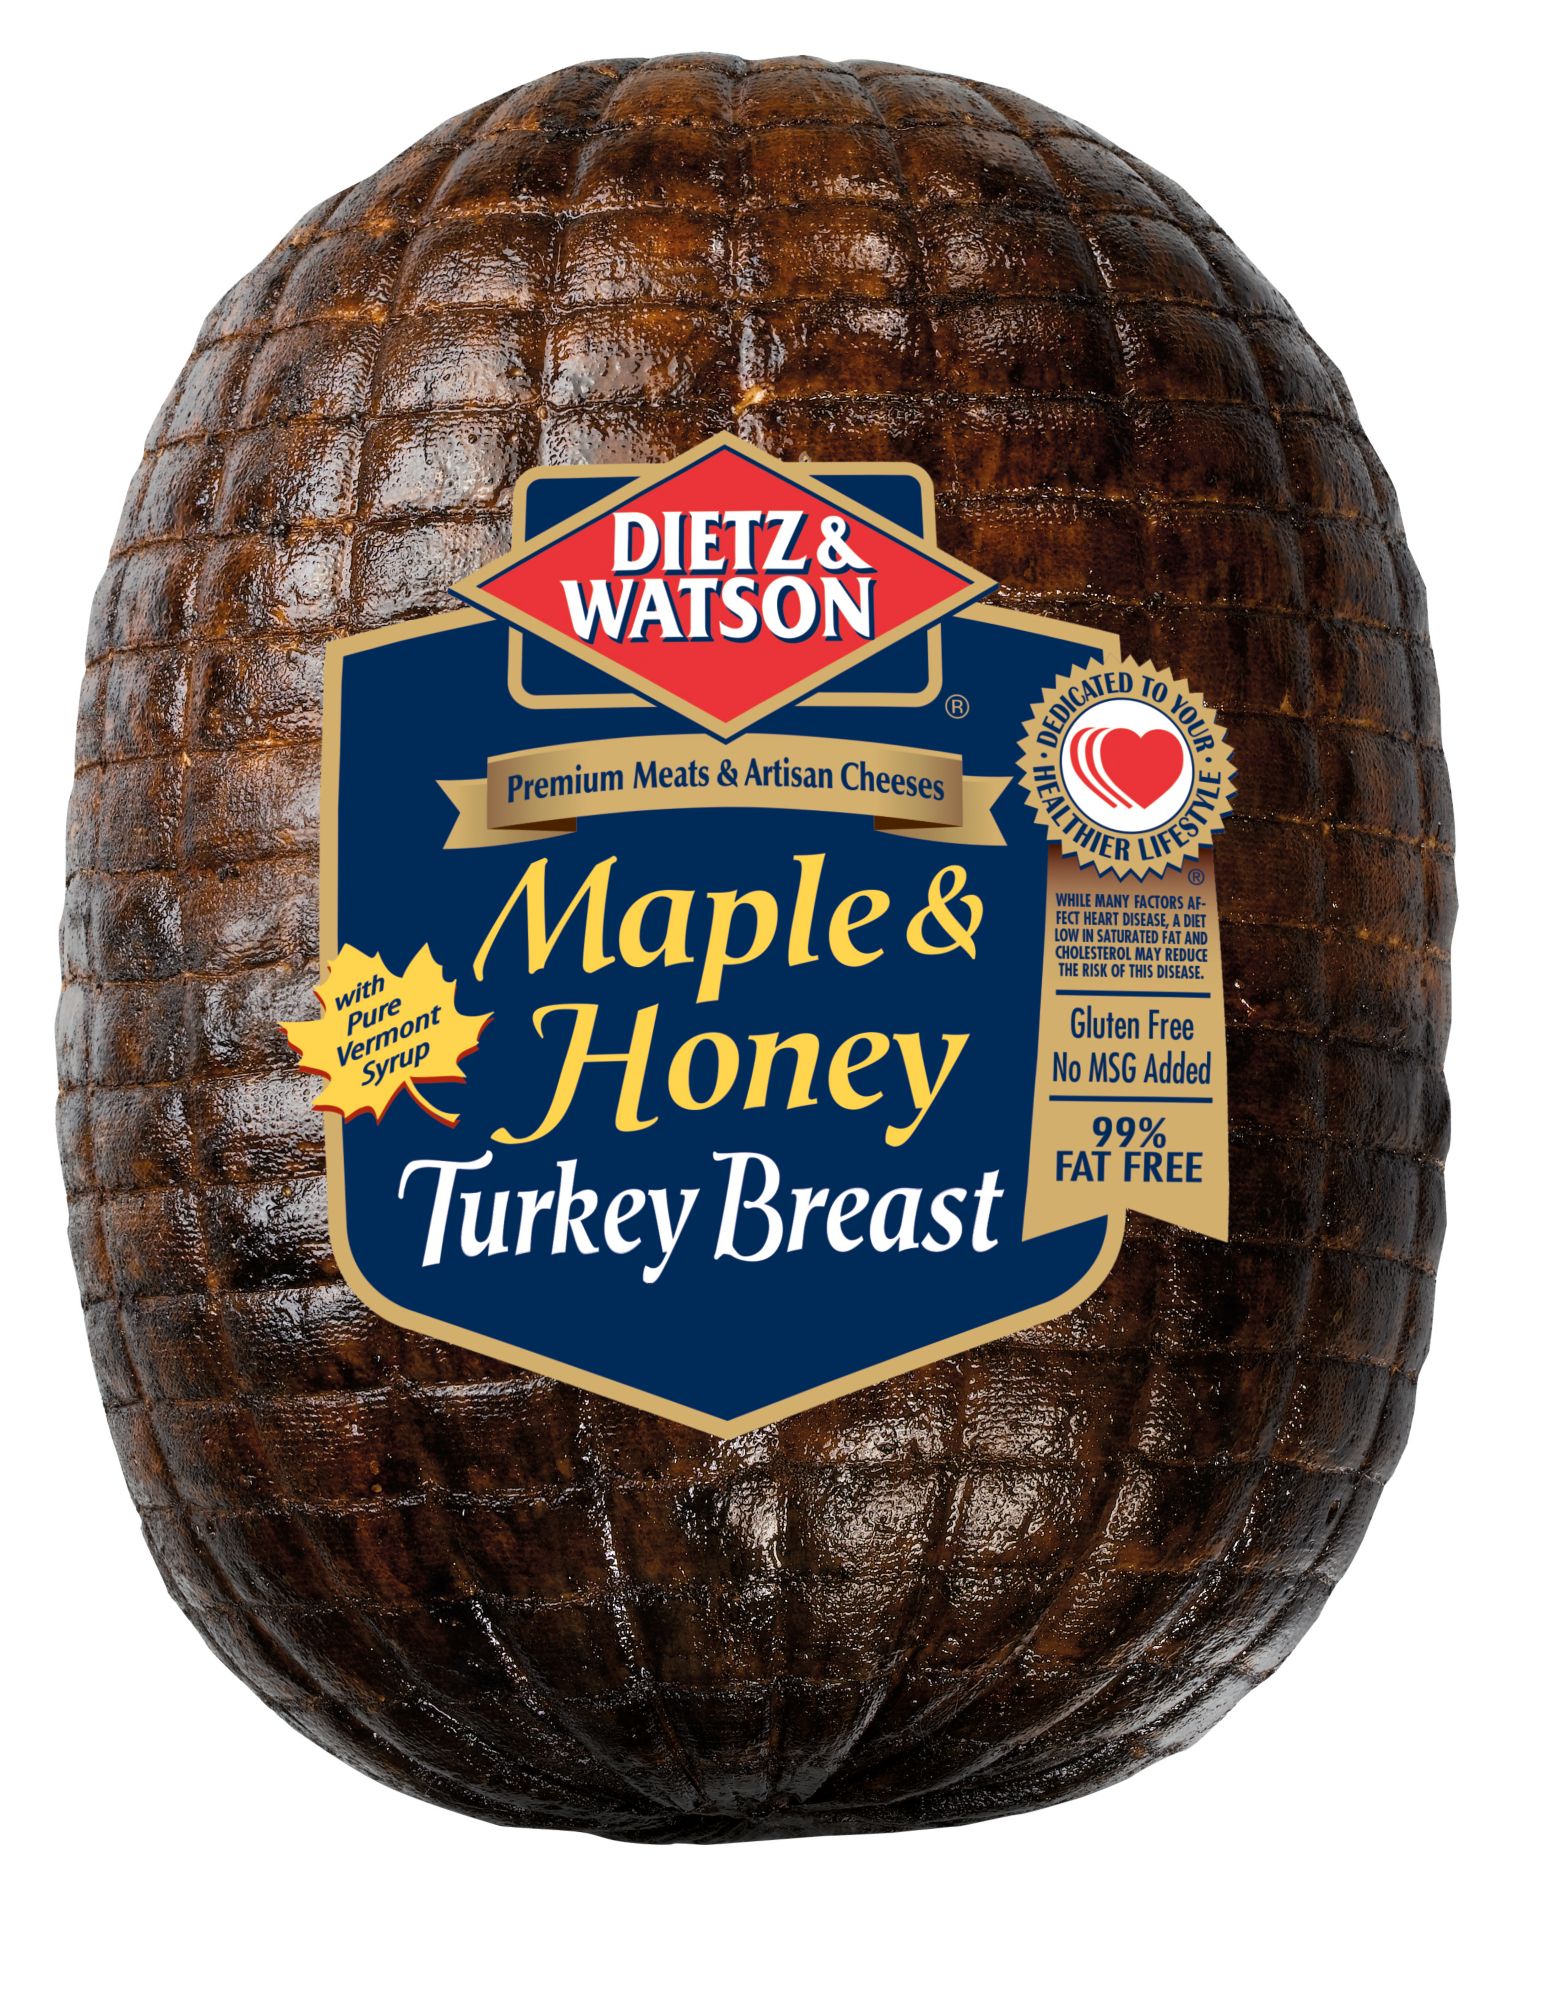 Maple and Honey Turkey Breast, 0.75-1.5 lb Standard Cut